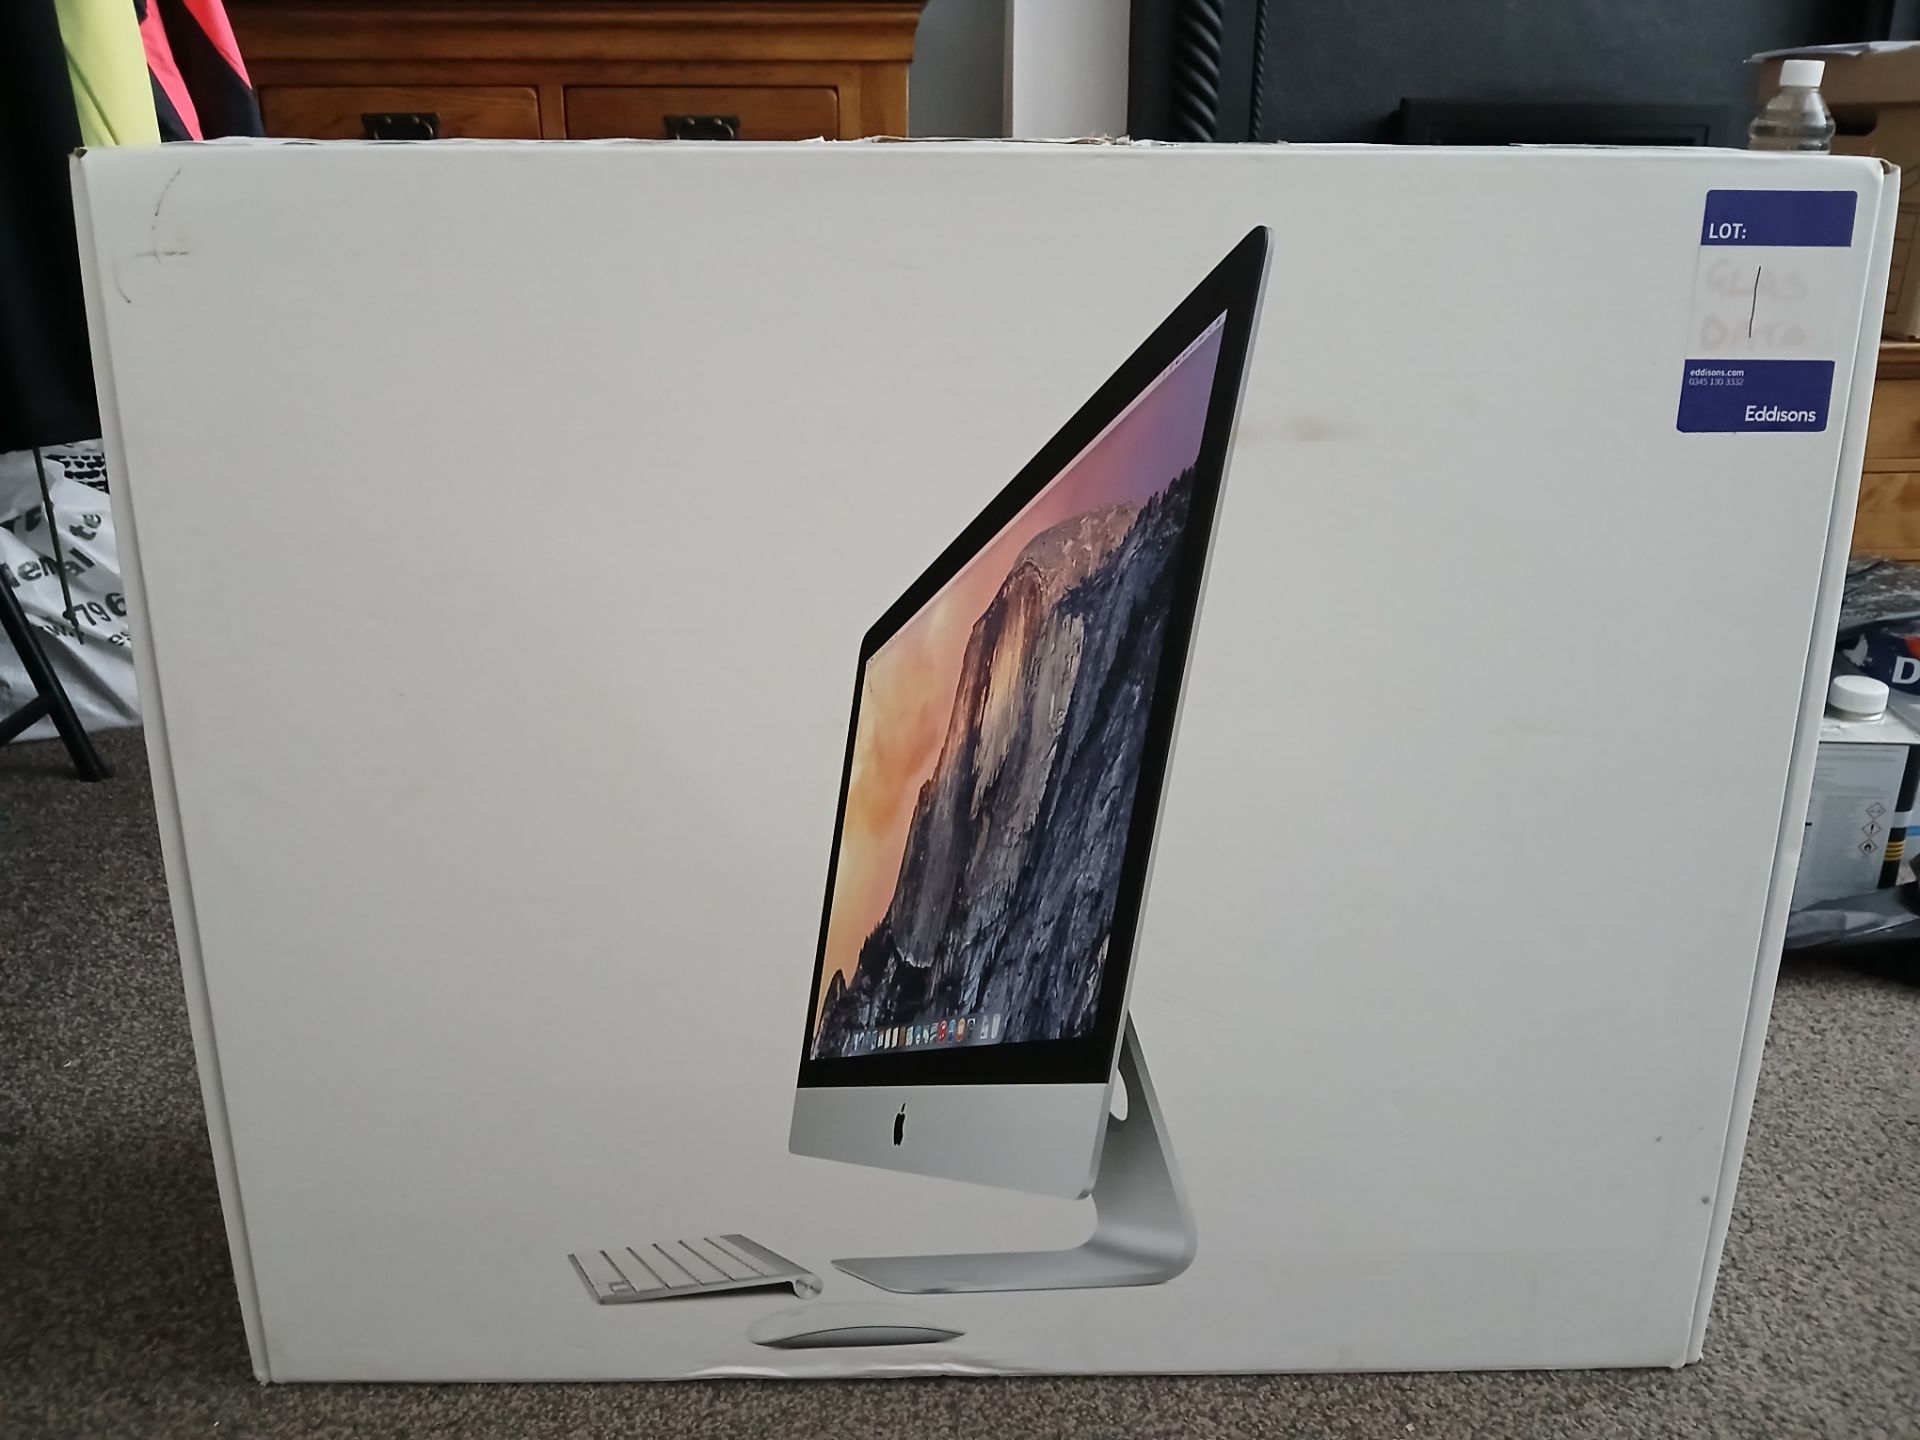 Apple iMac (Retina 5K, 27”, 2019), Serial Number DGK2HE9JV3Y (iMac only, no mouse, keyboard, or - Image 2 of 14